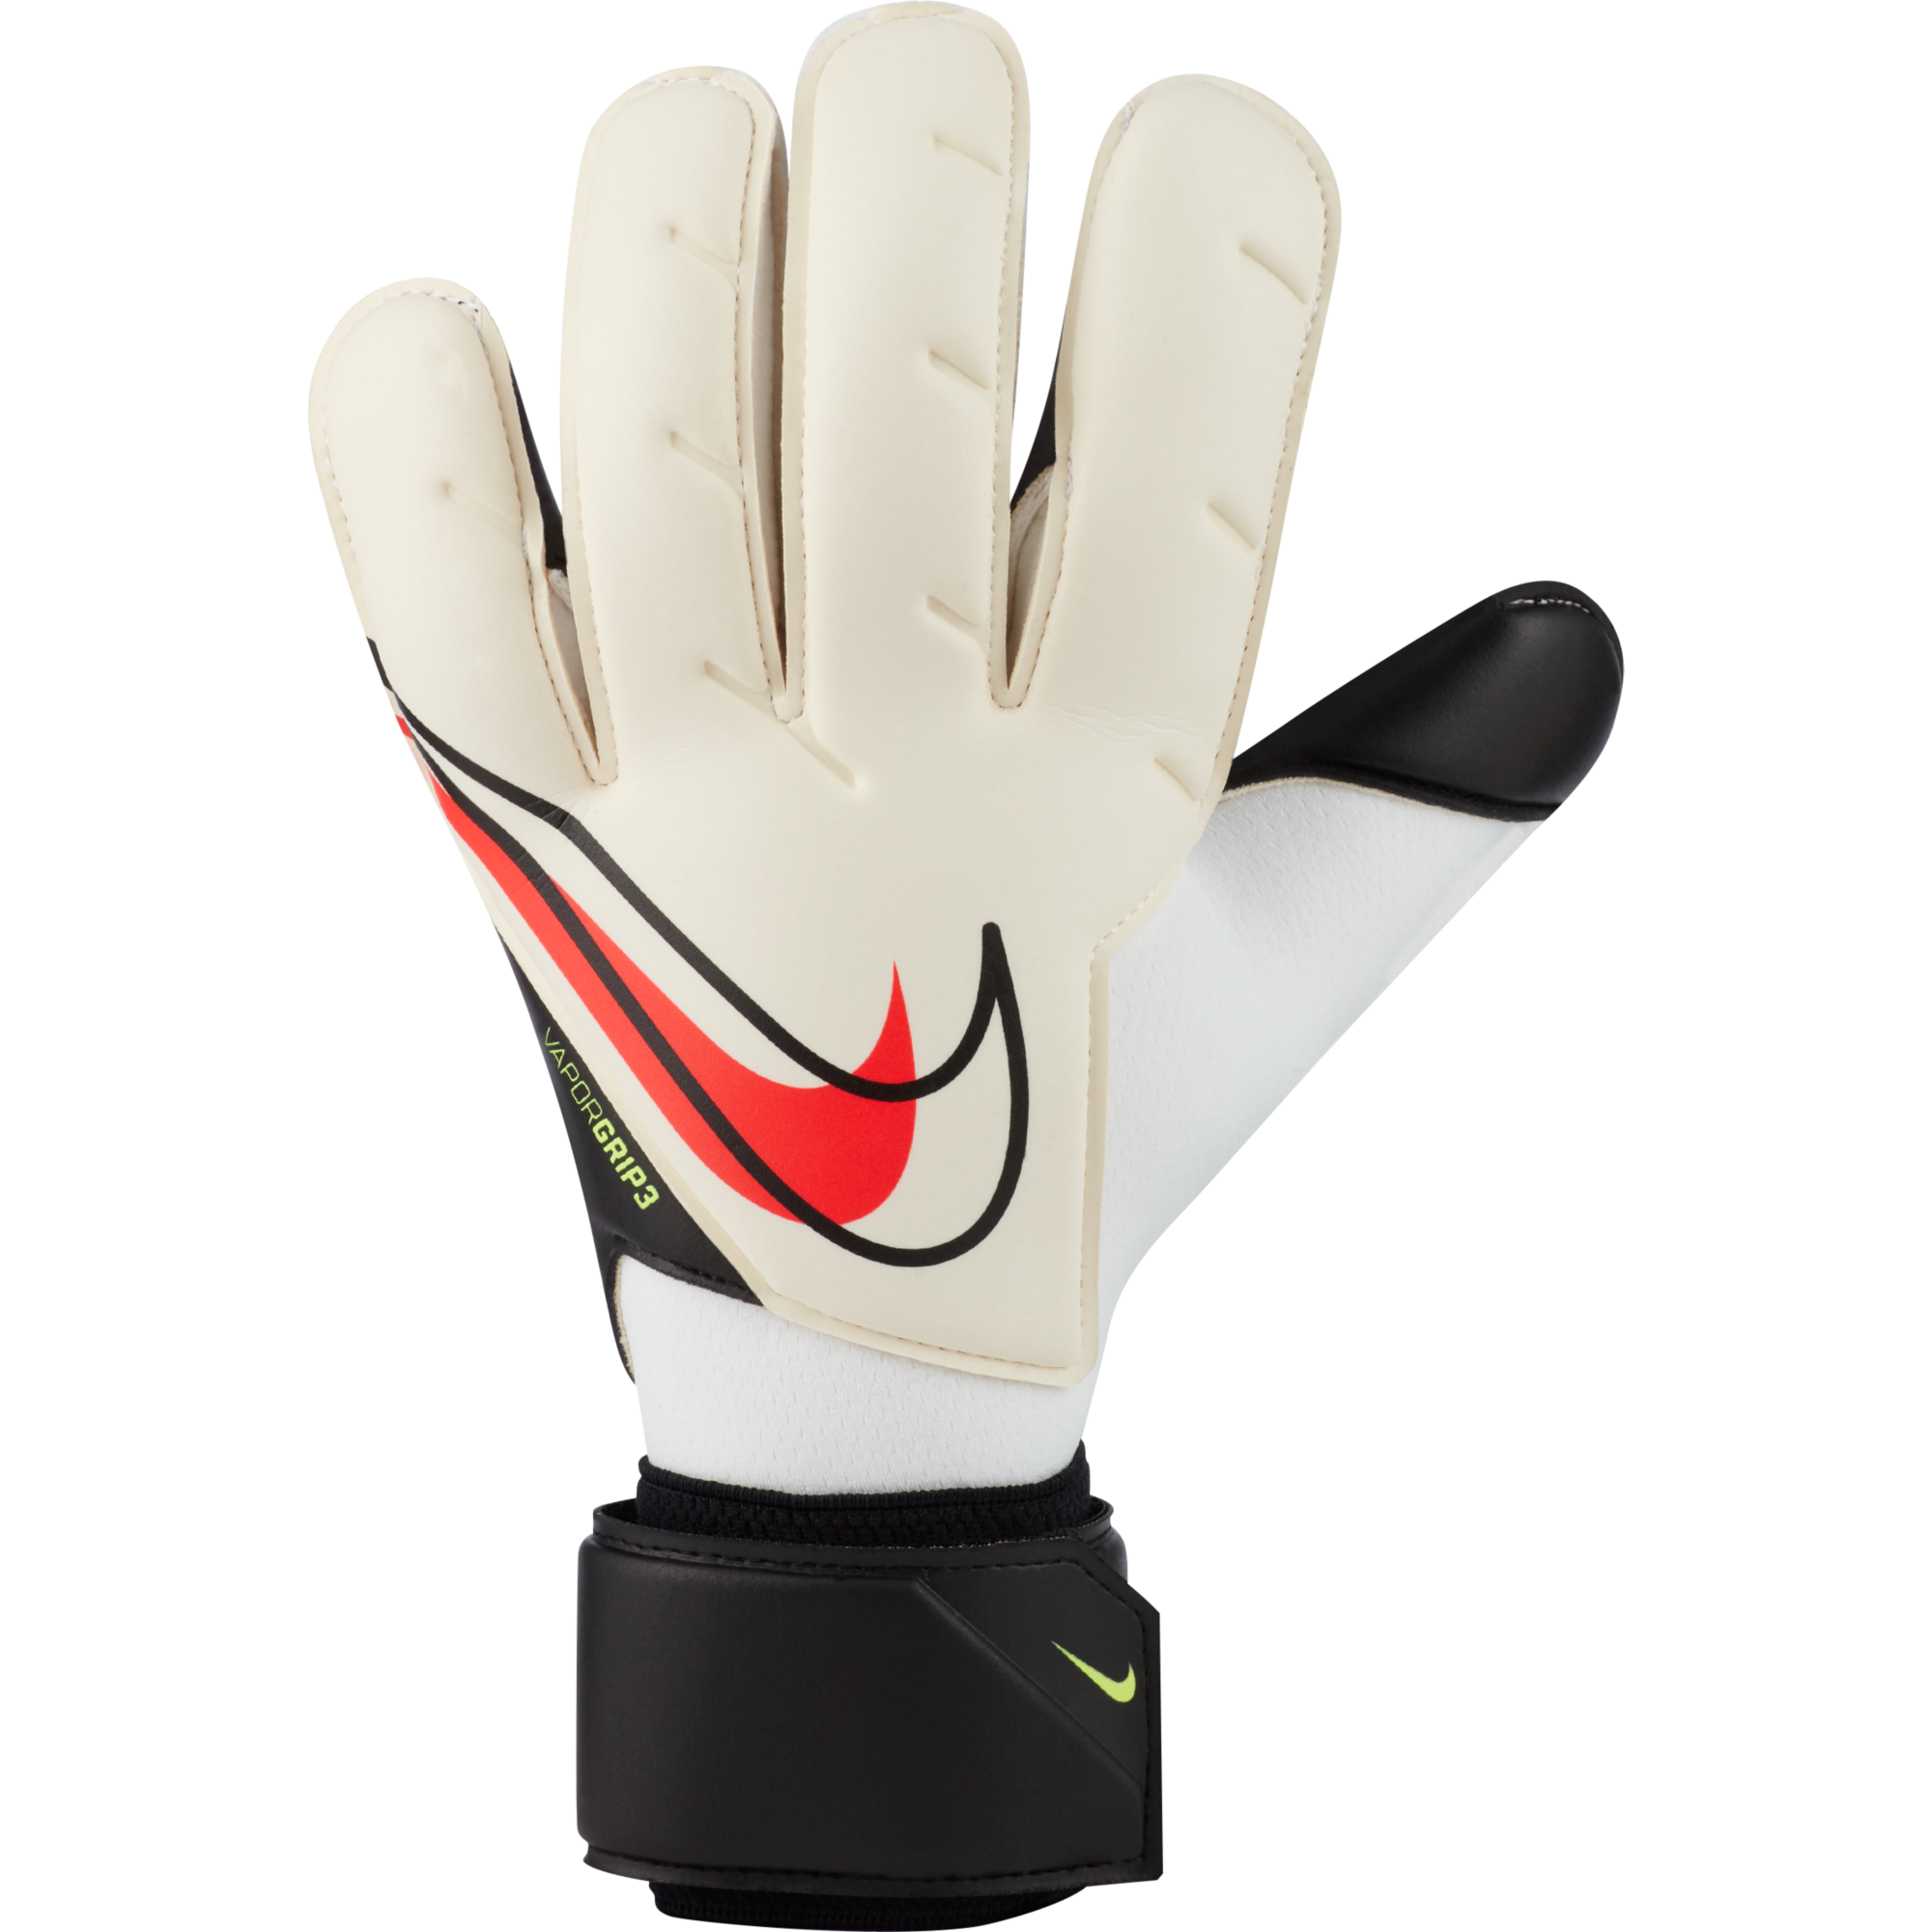 Gesprekelijk de elite maximaal stefanssoccer.com:Nike Vapor Grip 3 Goalkeeper Gloves - White / Black /  Bright Crimson